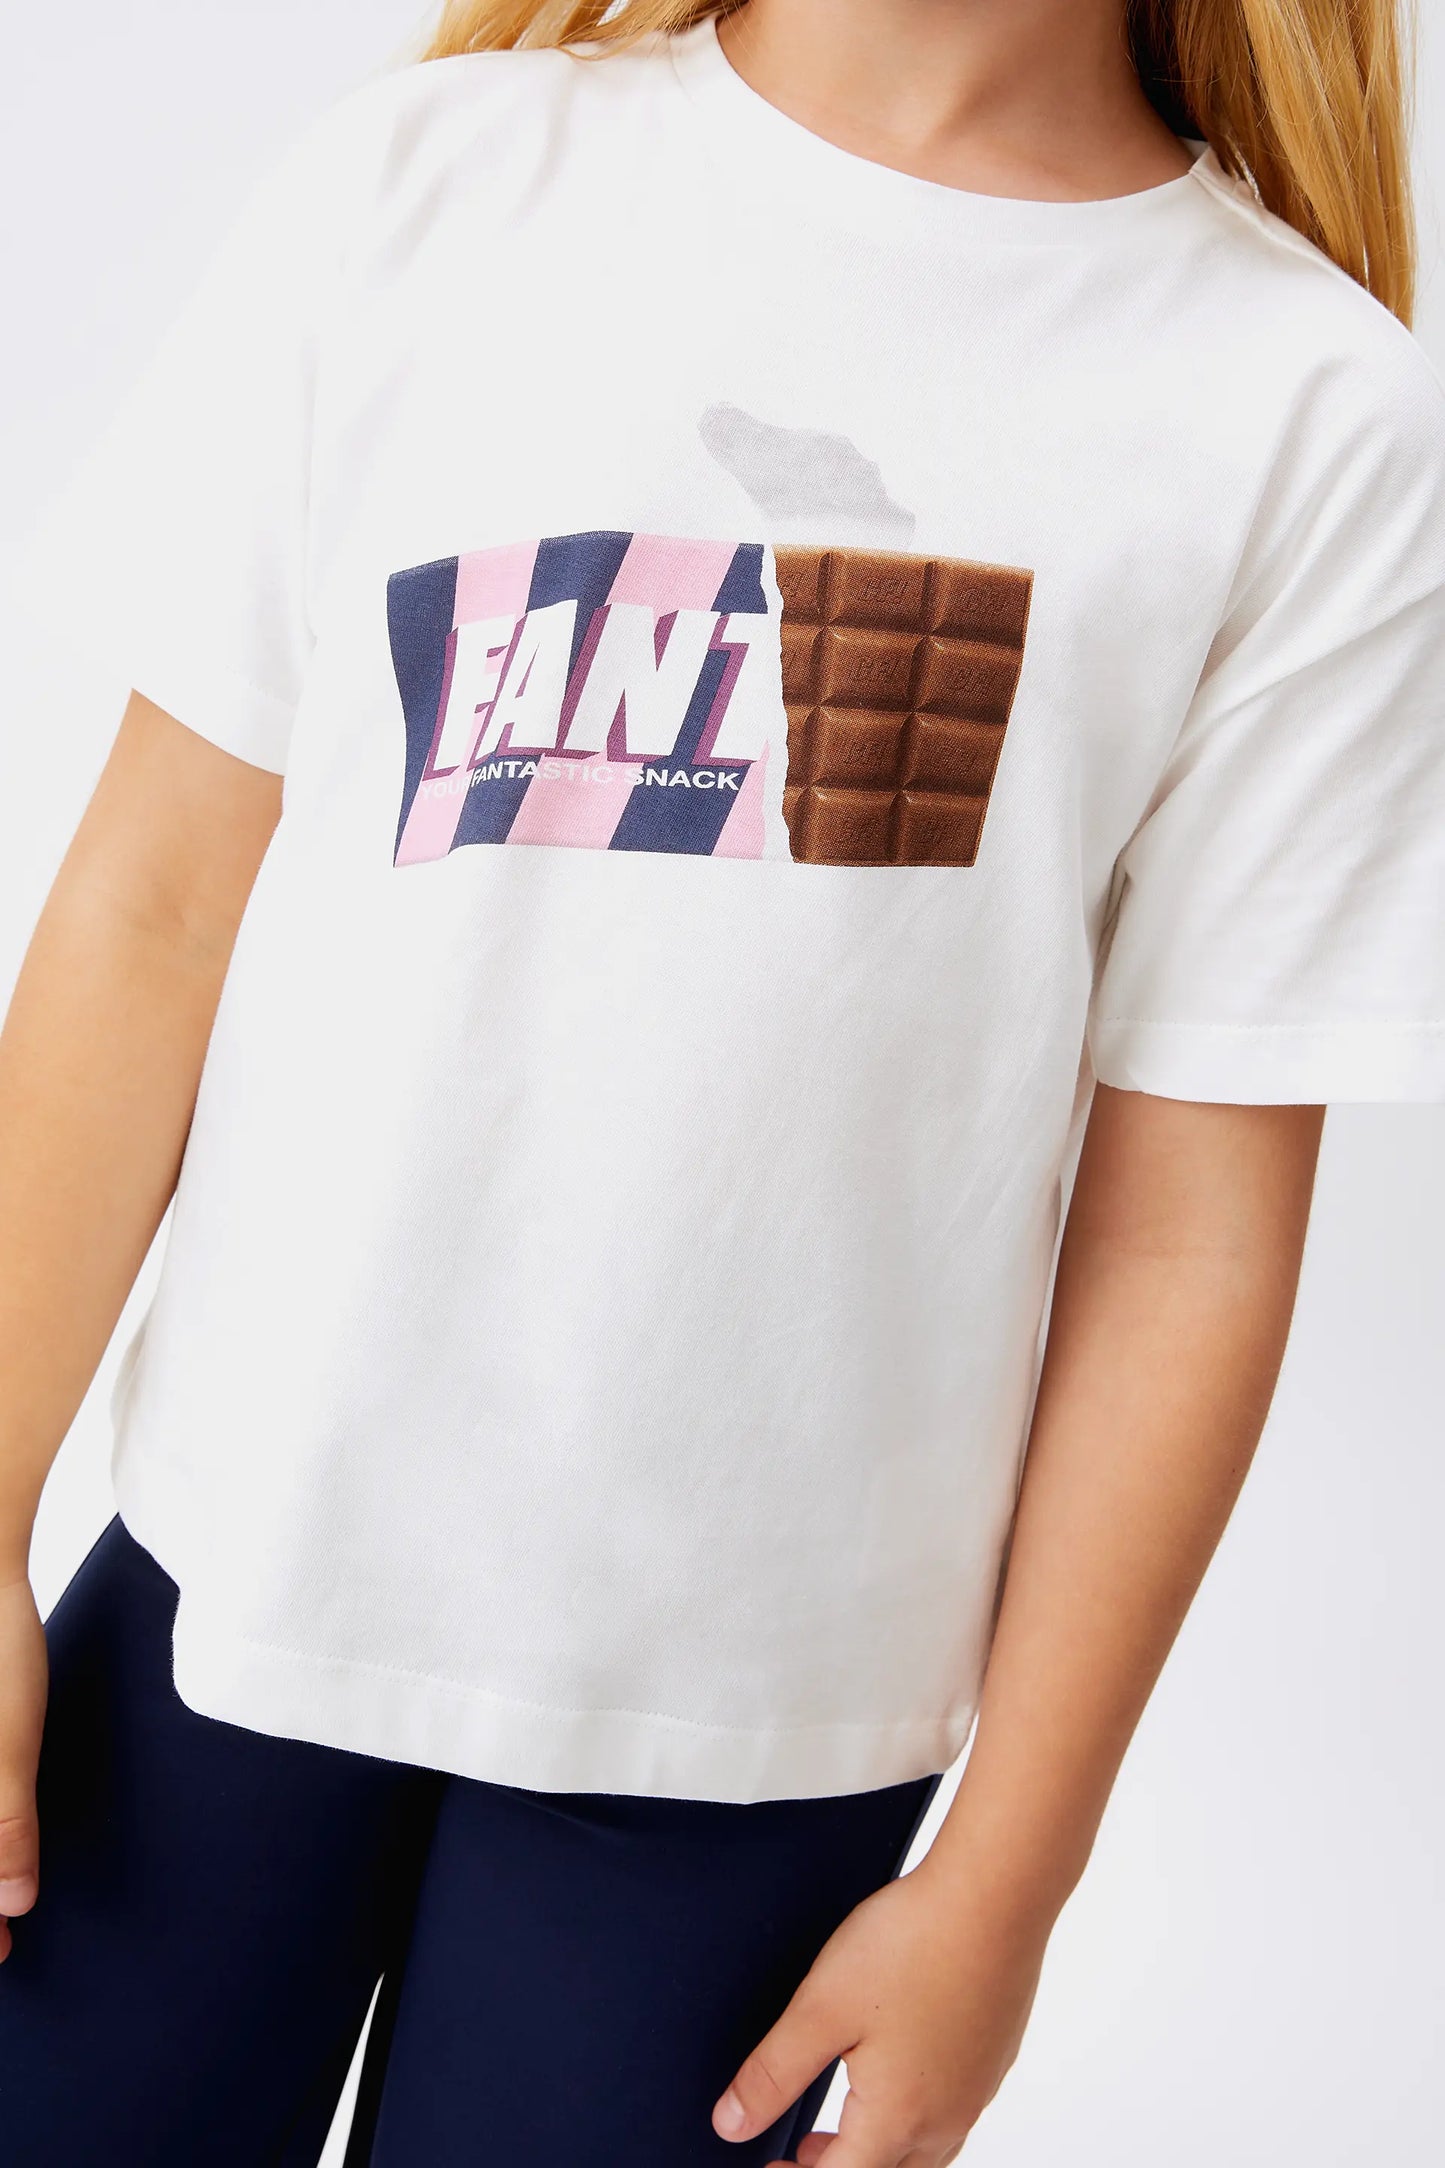 T-shirt unisex color cioccolato bianco